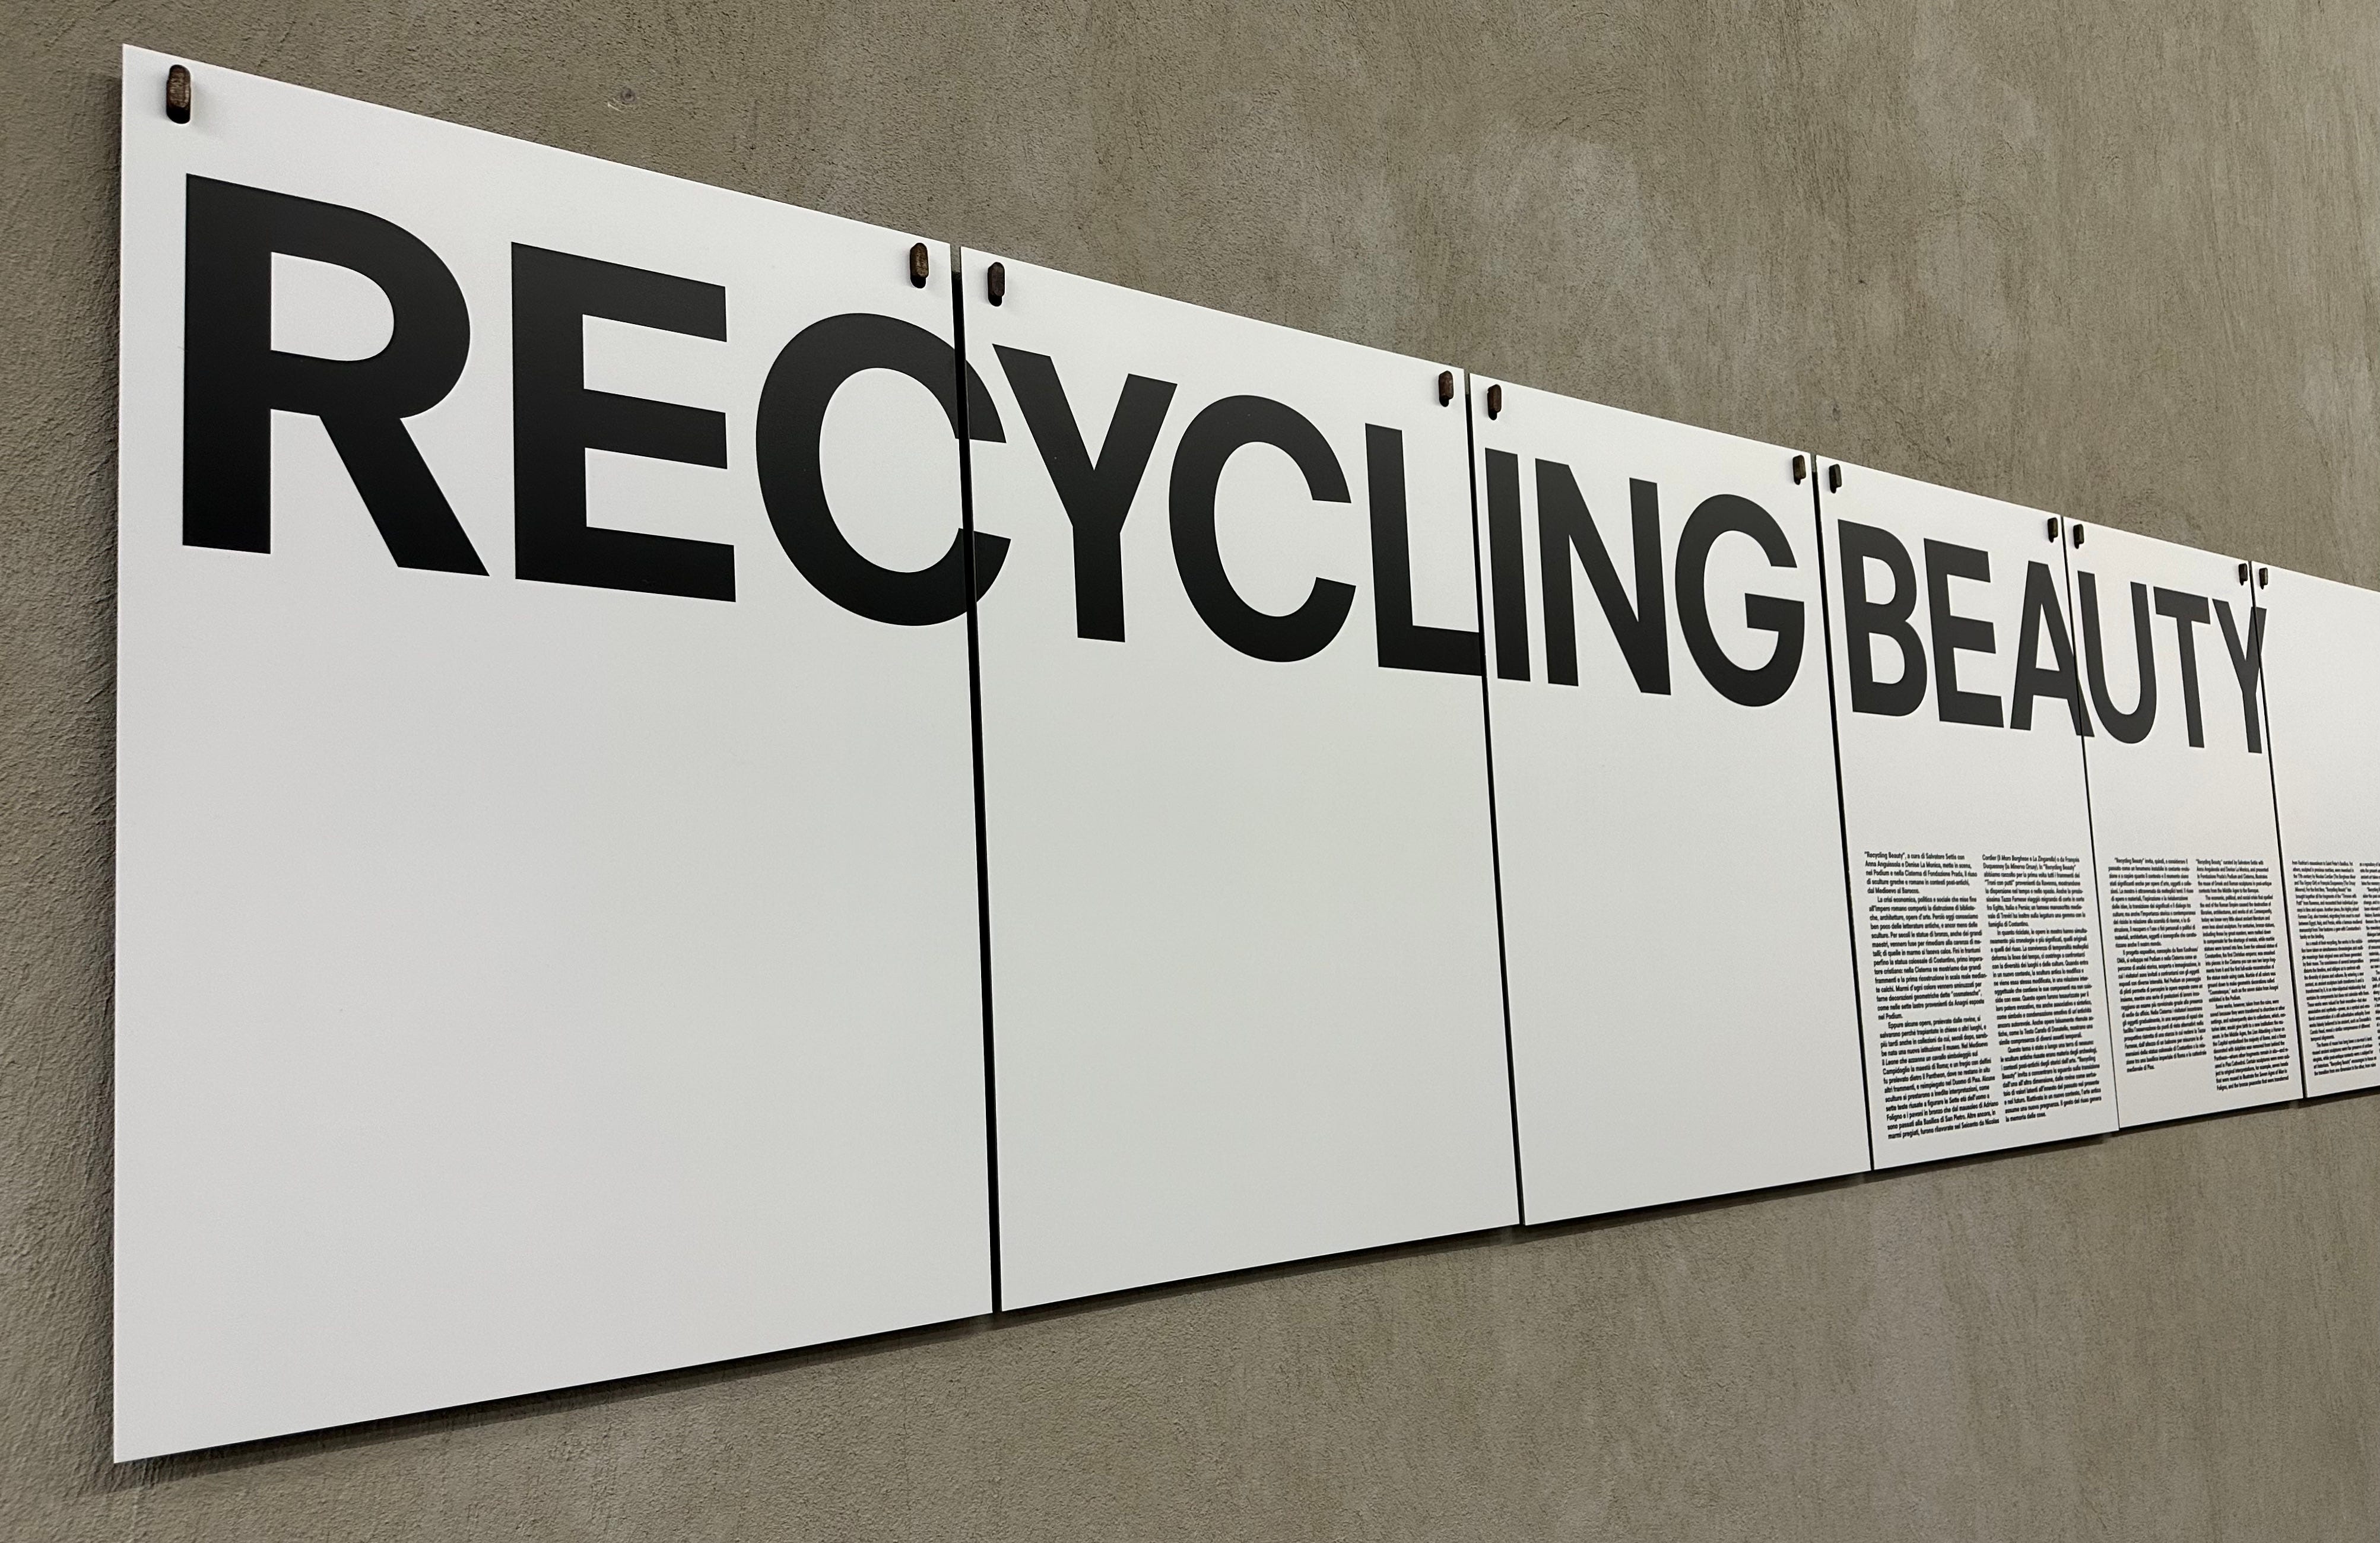 Beauty recycled in major Fondazione Prada exhibition